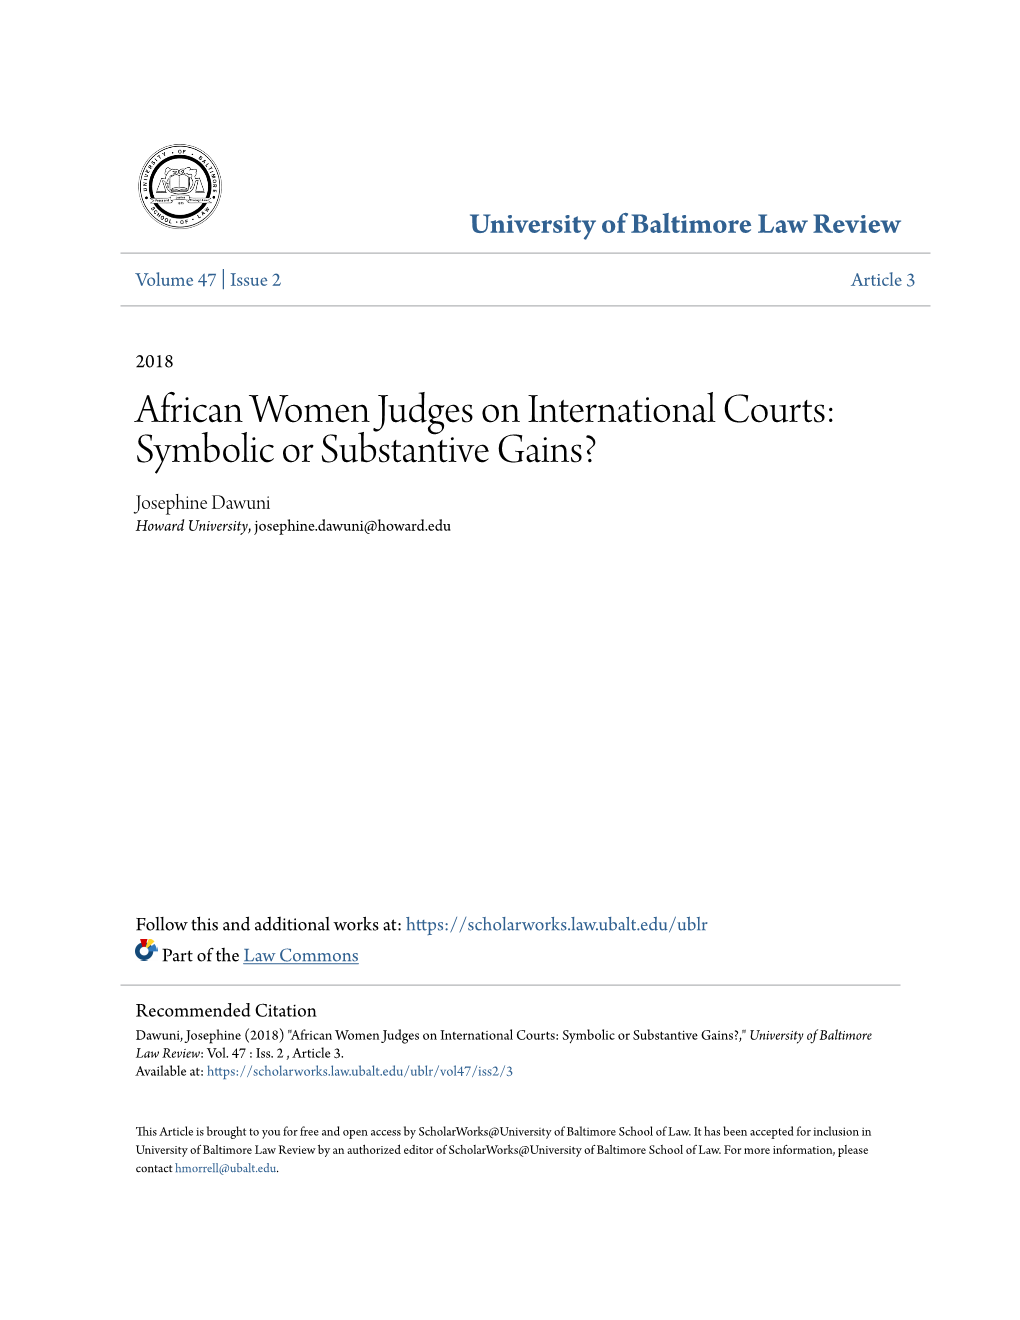 African Women Judges on International Courts: Symbolic Or Substantive Gains? Josephine Dawuni Howard University, Josephine.Dawuni@Howard.Edu